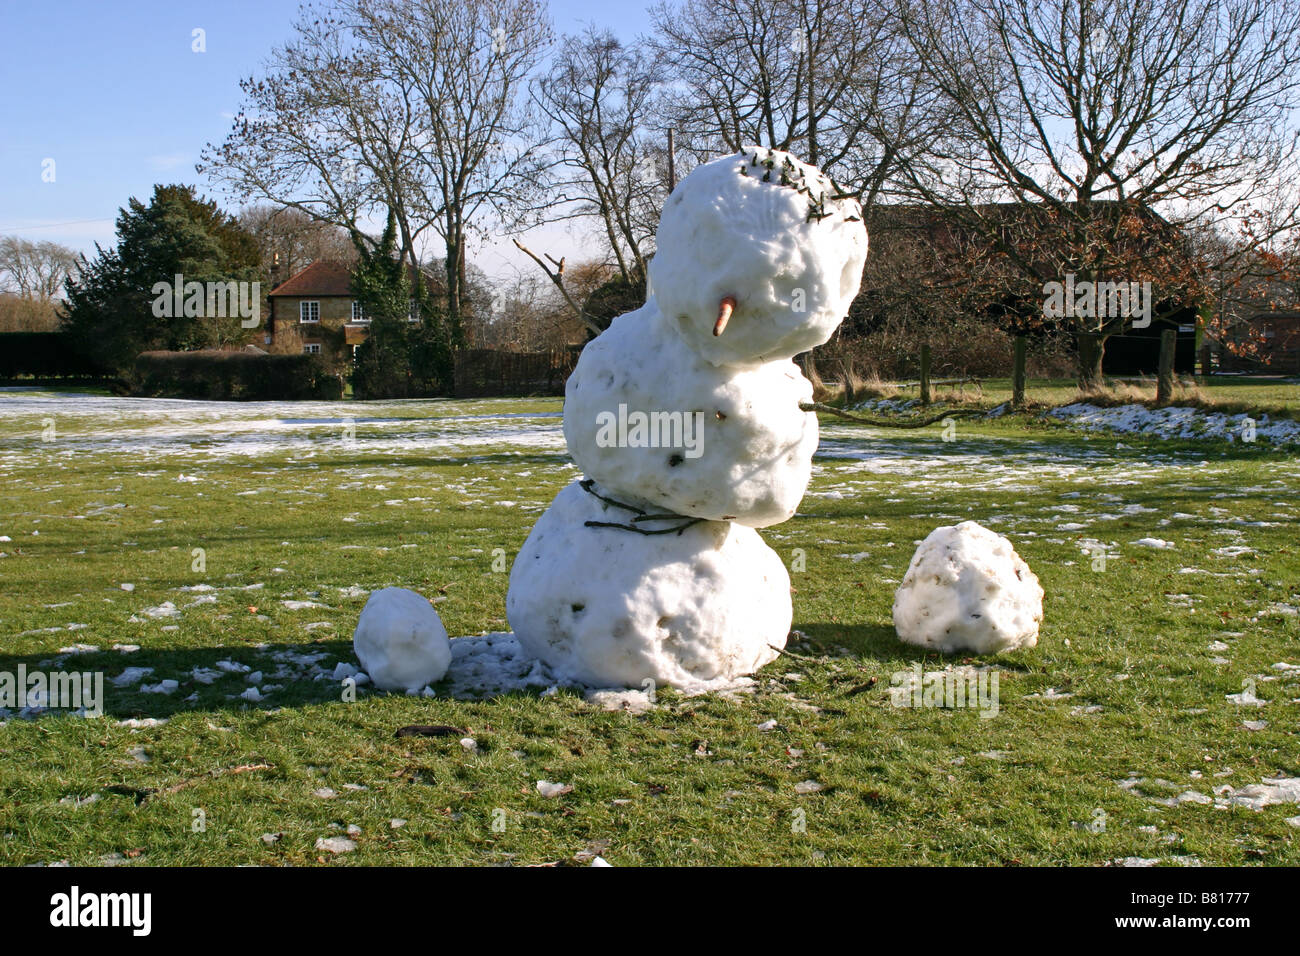 Melting Snowman Stock Photo 8375935